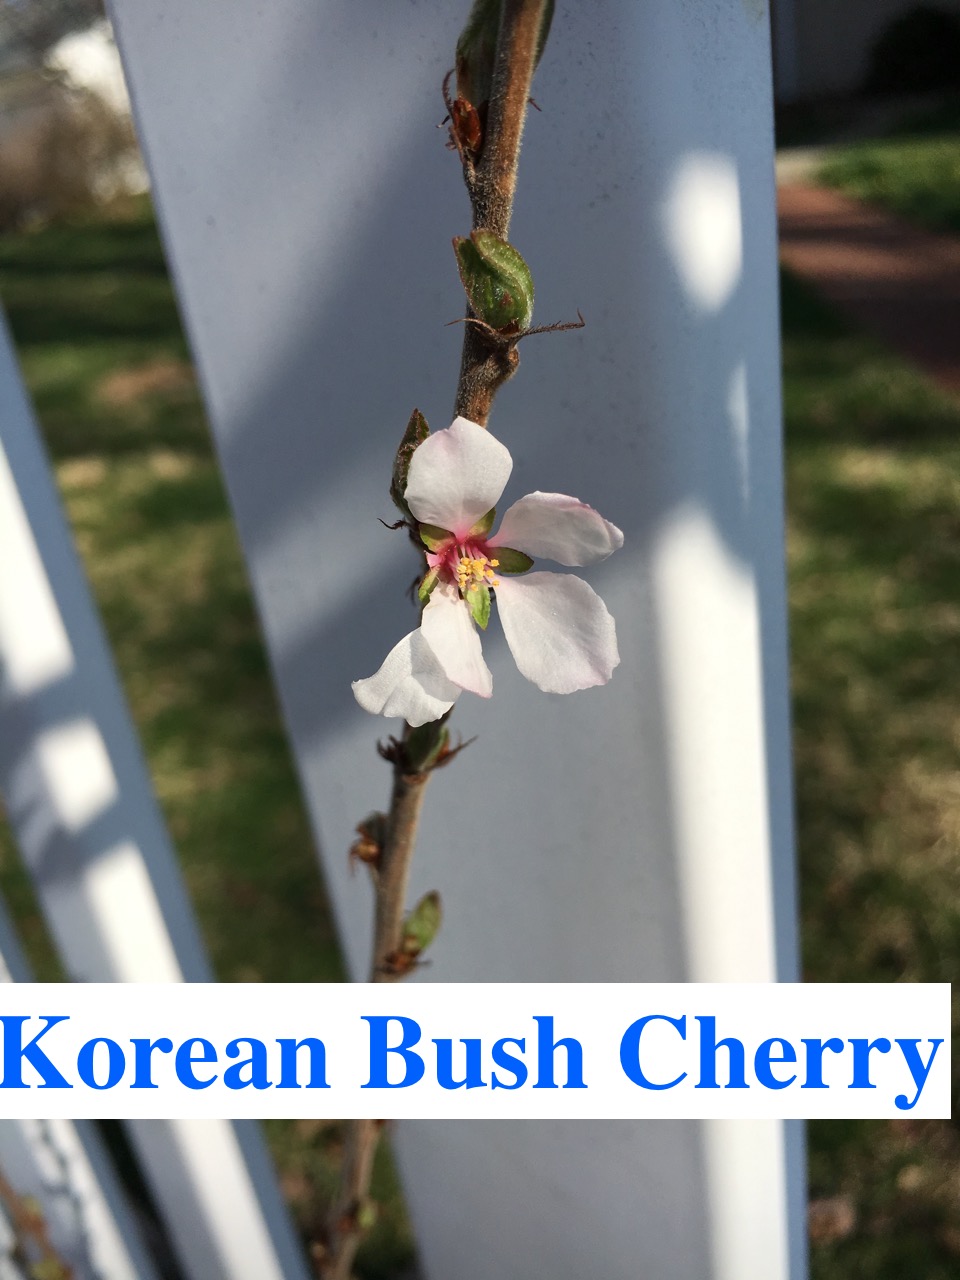 Korean Bush Cherry